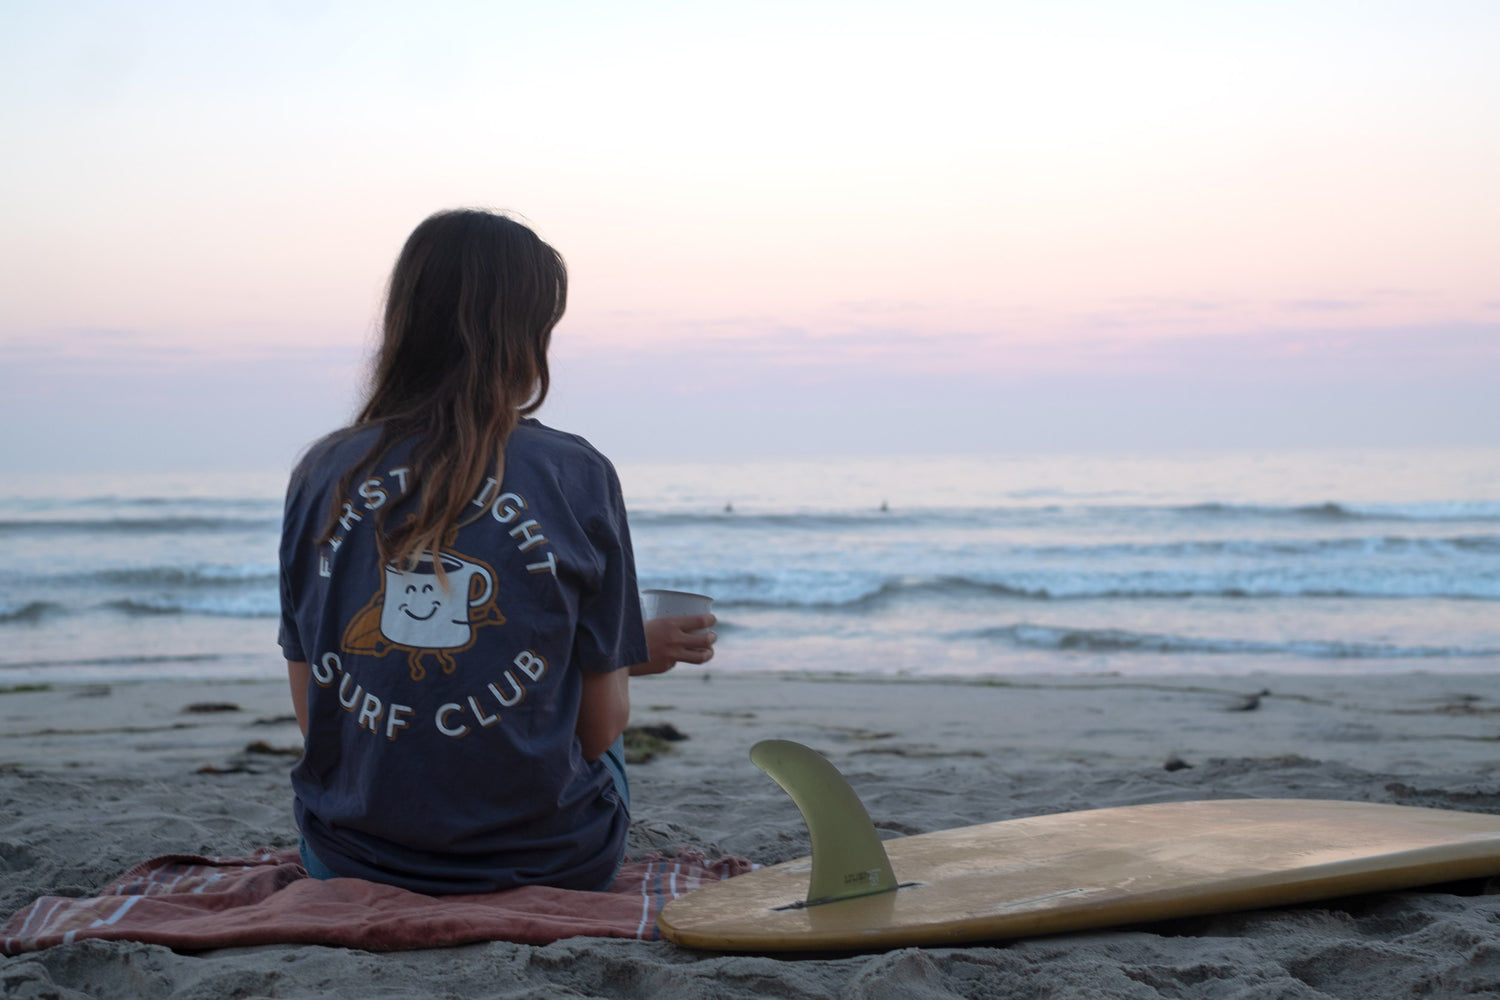 First Light Surf Club dawn patrol sunrise early morning surfing before work San Diego Encinitas Carlsbad Oceanside coffee and waves